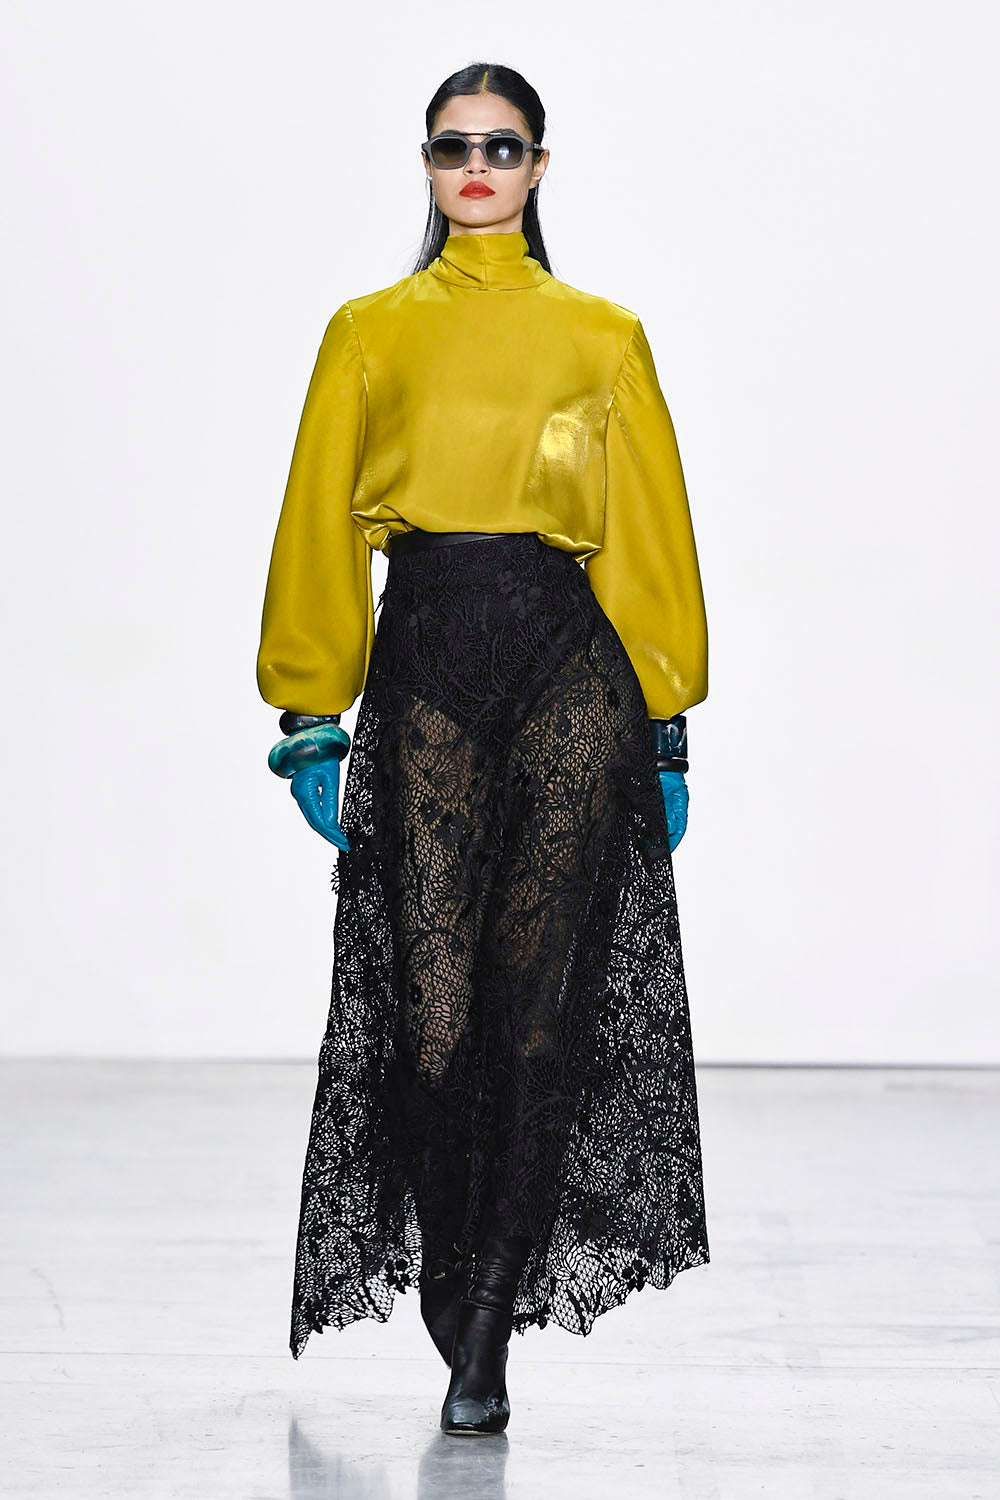 Onyx Cluny Lace Skirt with Vegan Leather Waistband